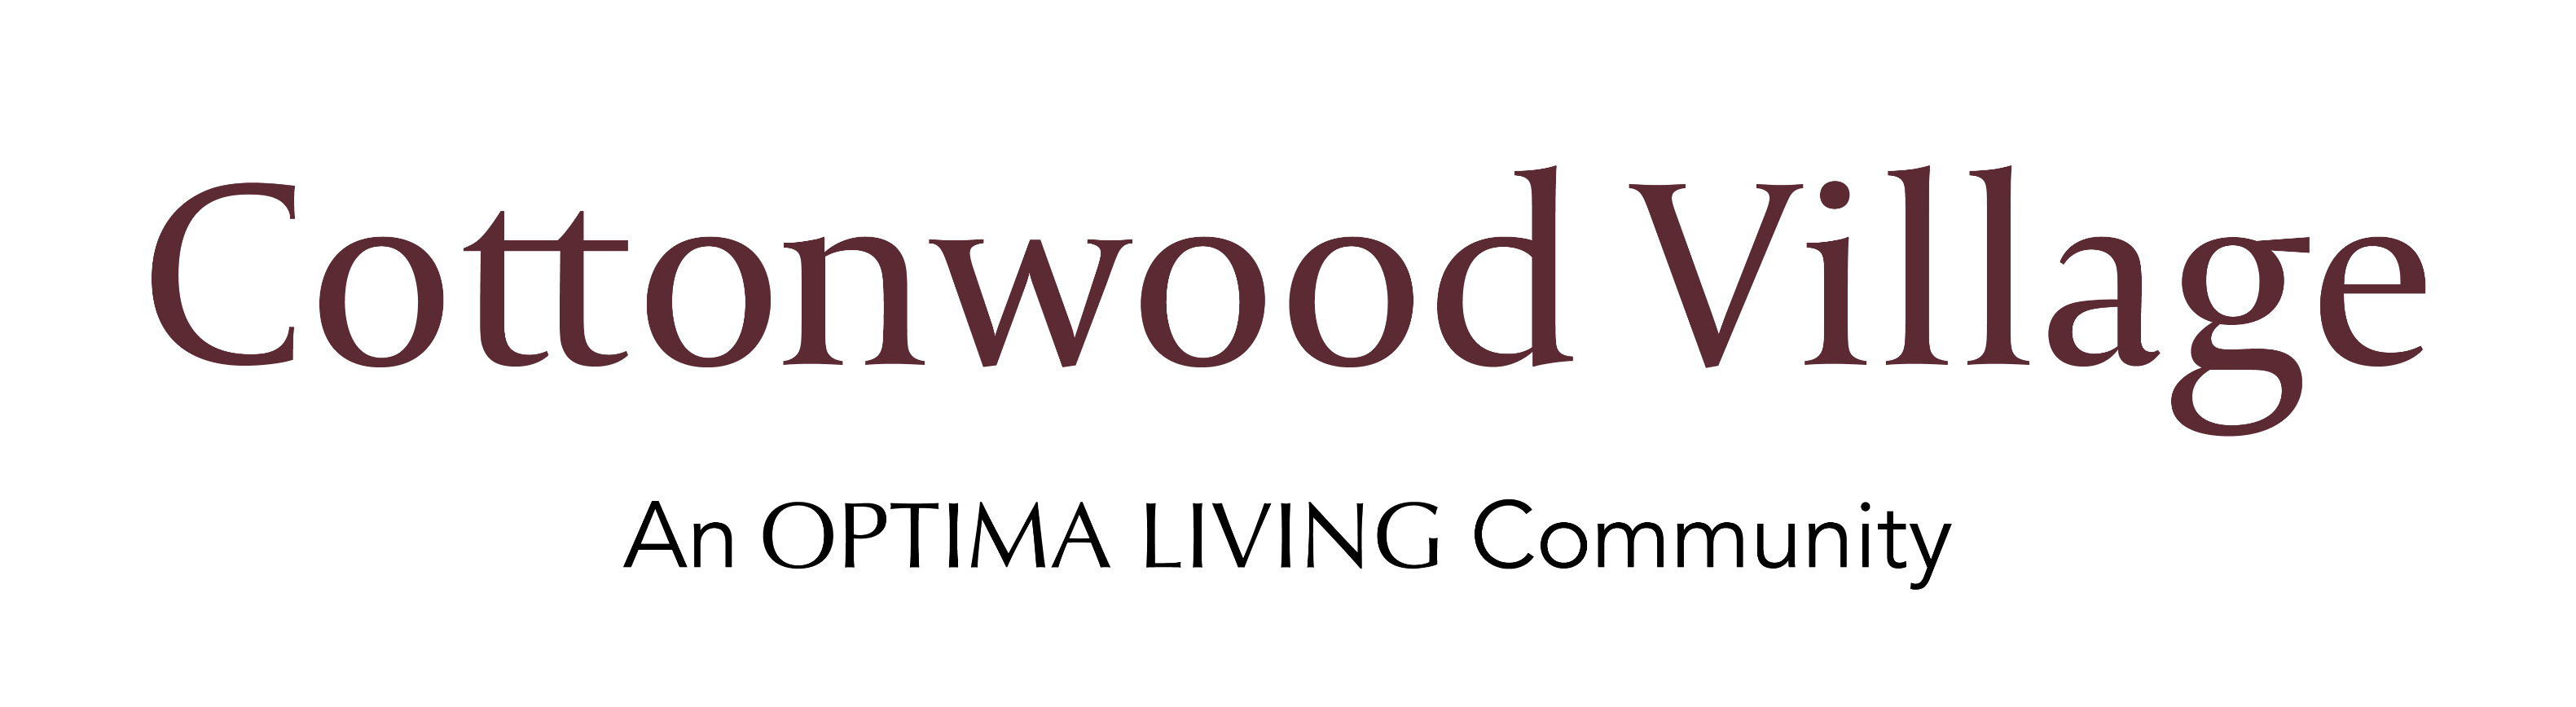 Cottonwood Village logo